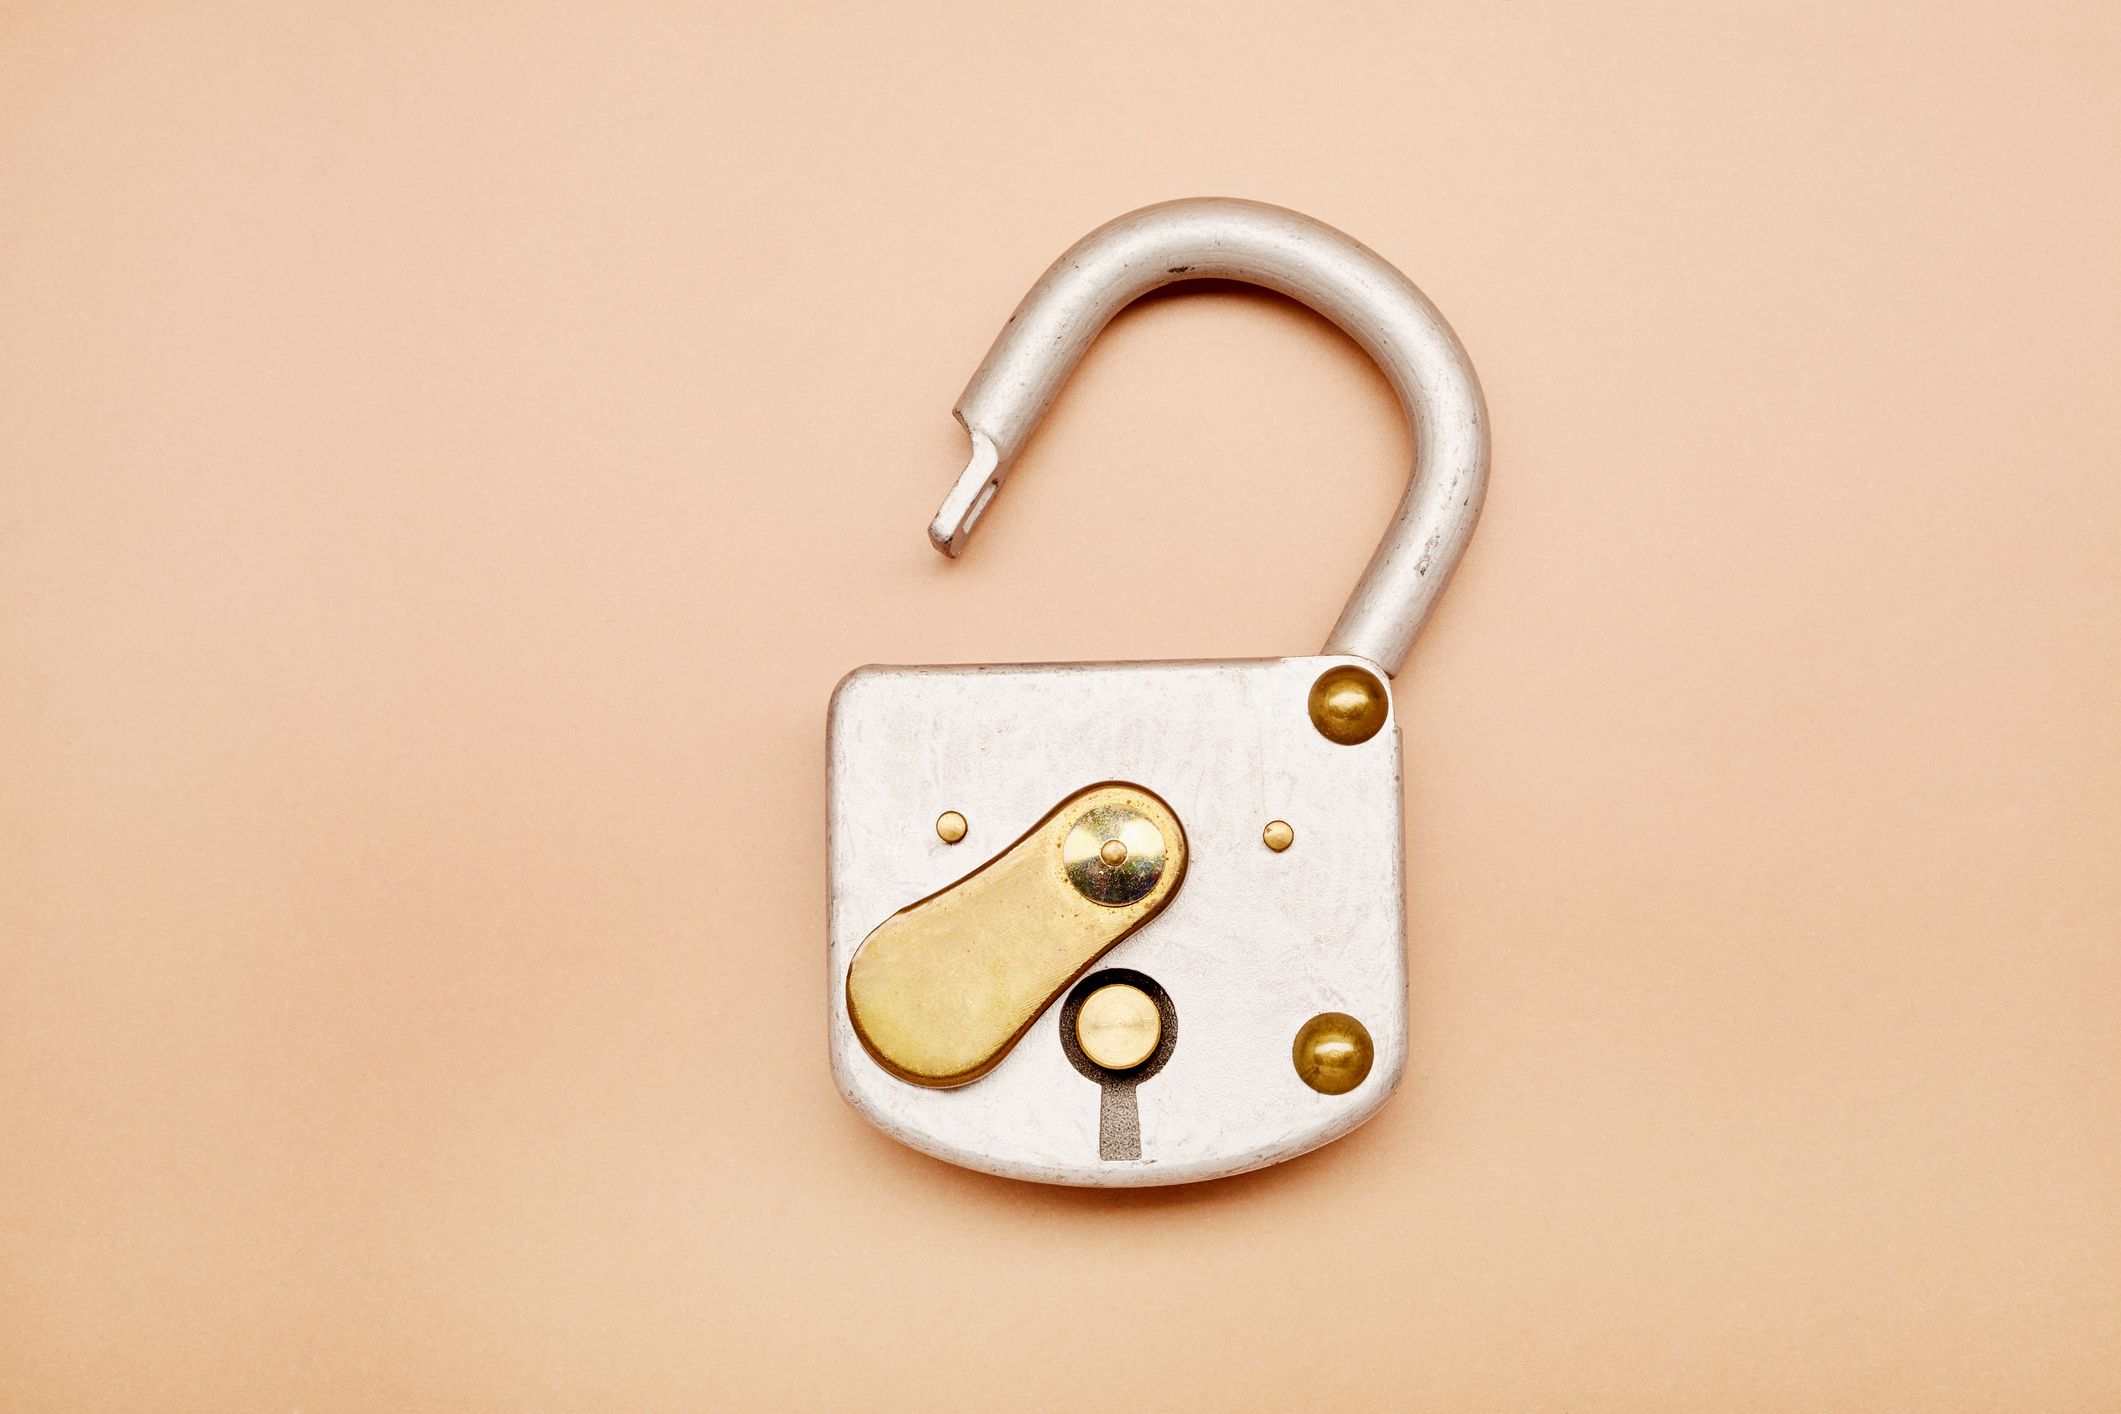 Open padlock on a plain background